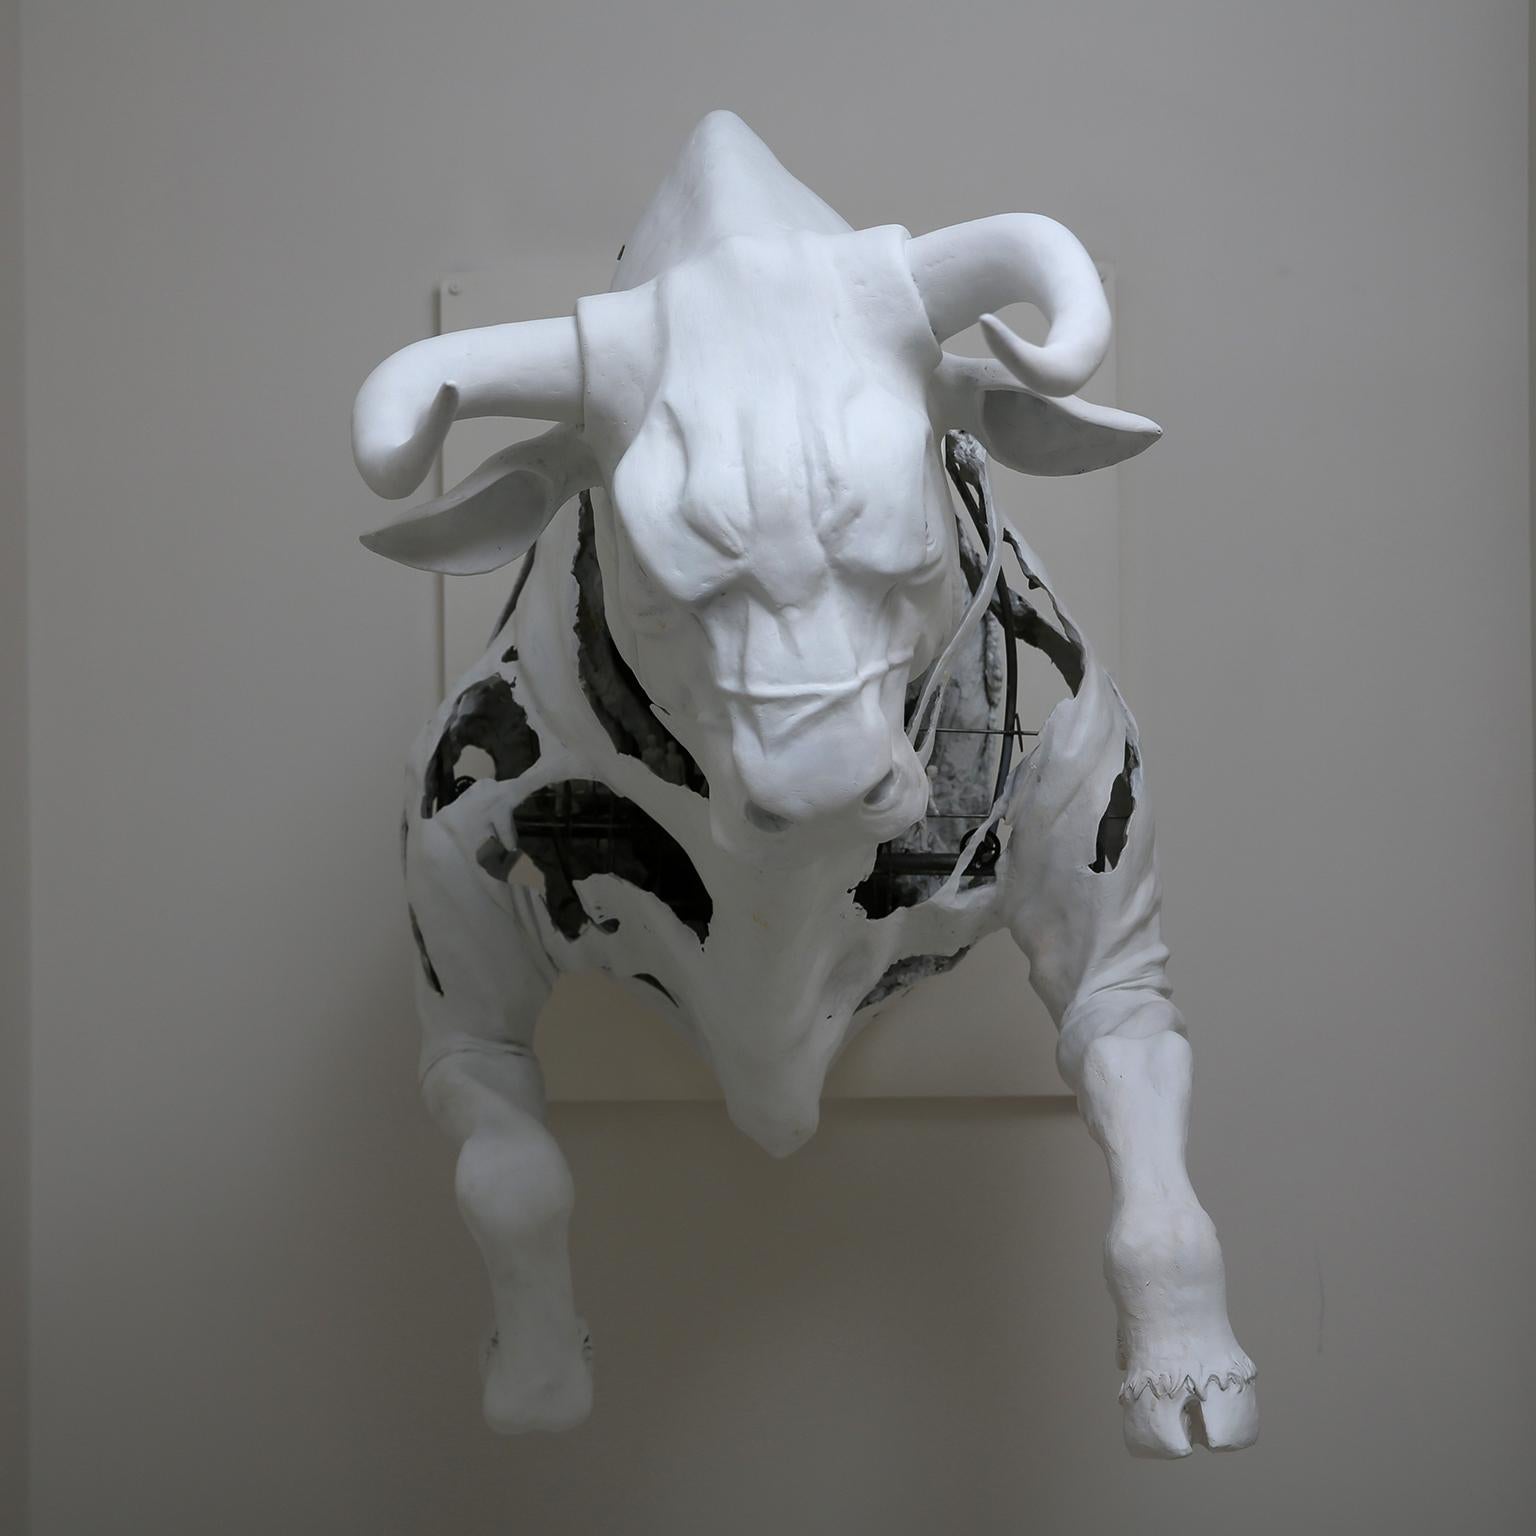 The Bull by Hobbes Vincent. White plaster and steel sculpture. Bull Bear Market 16